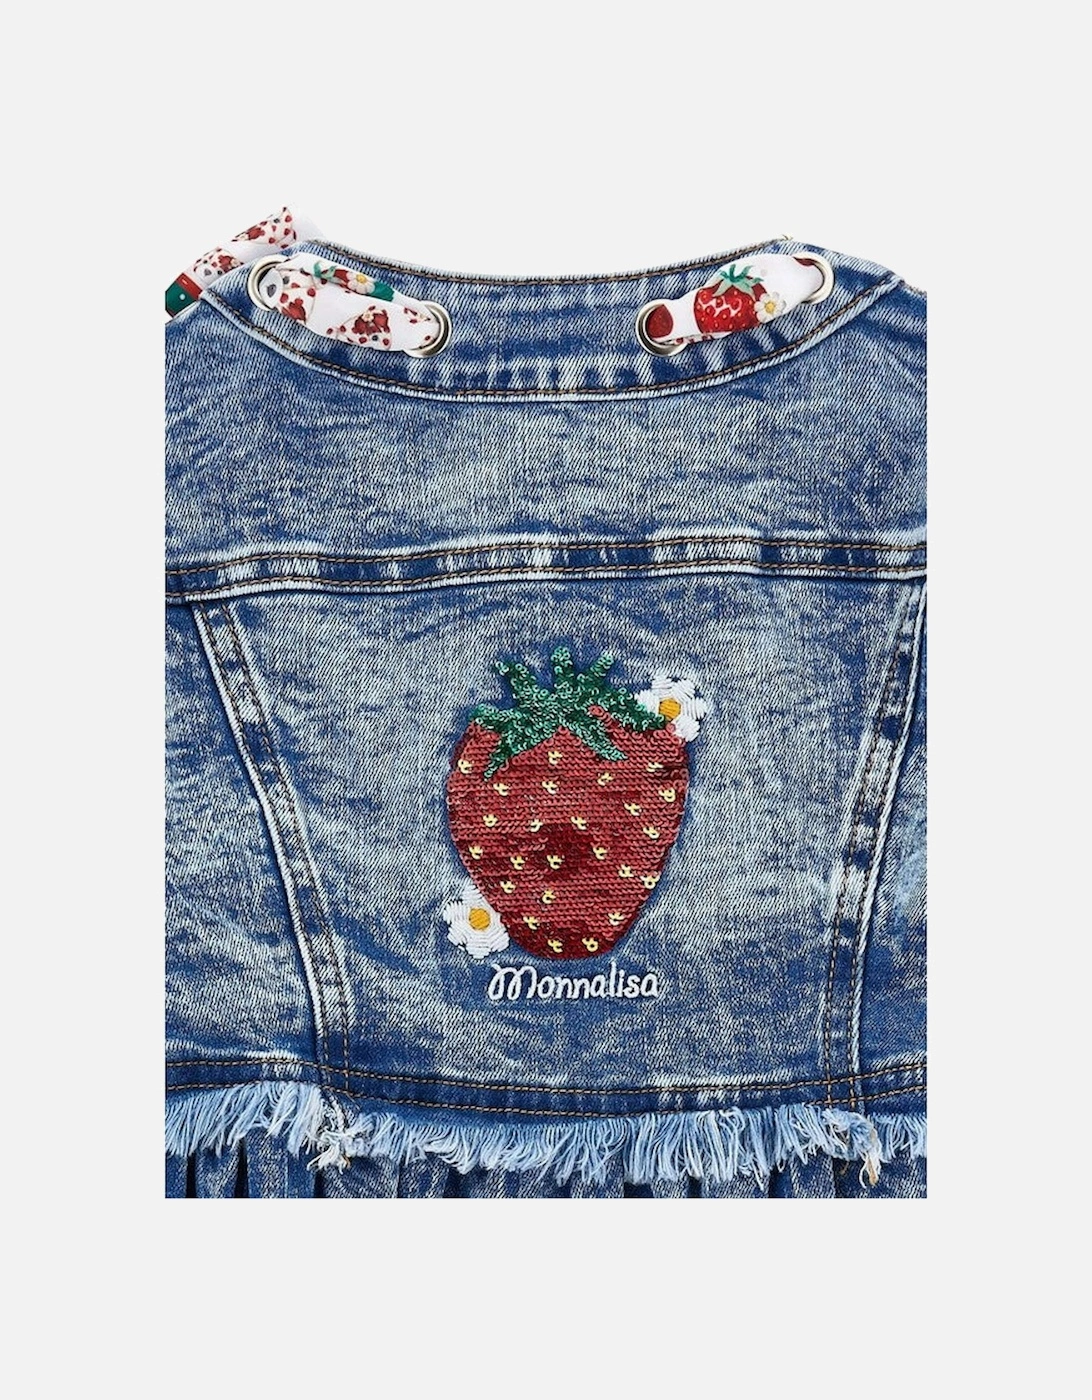 Girls Strawberry Denim Jacket